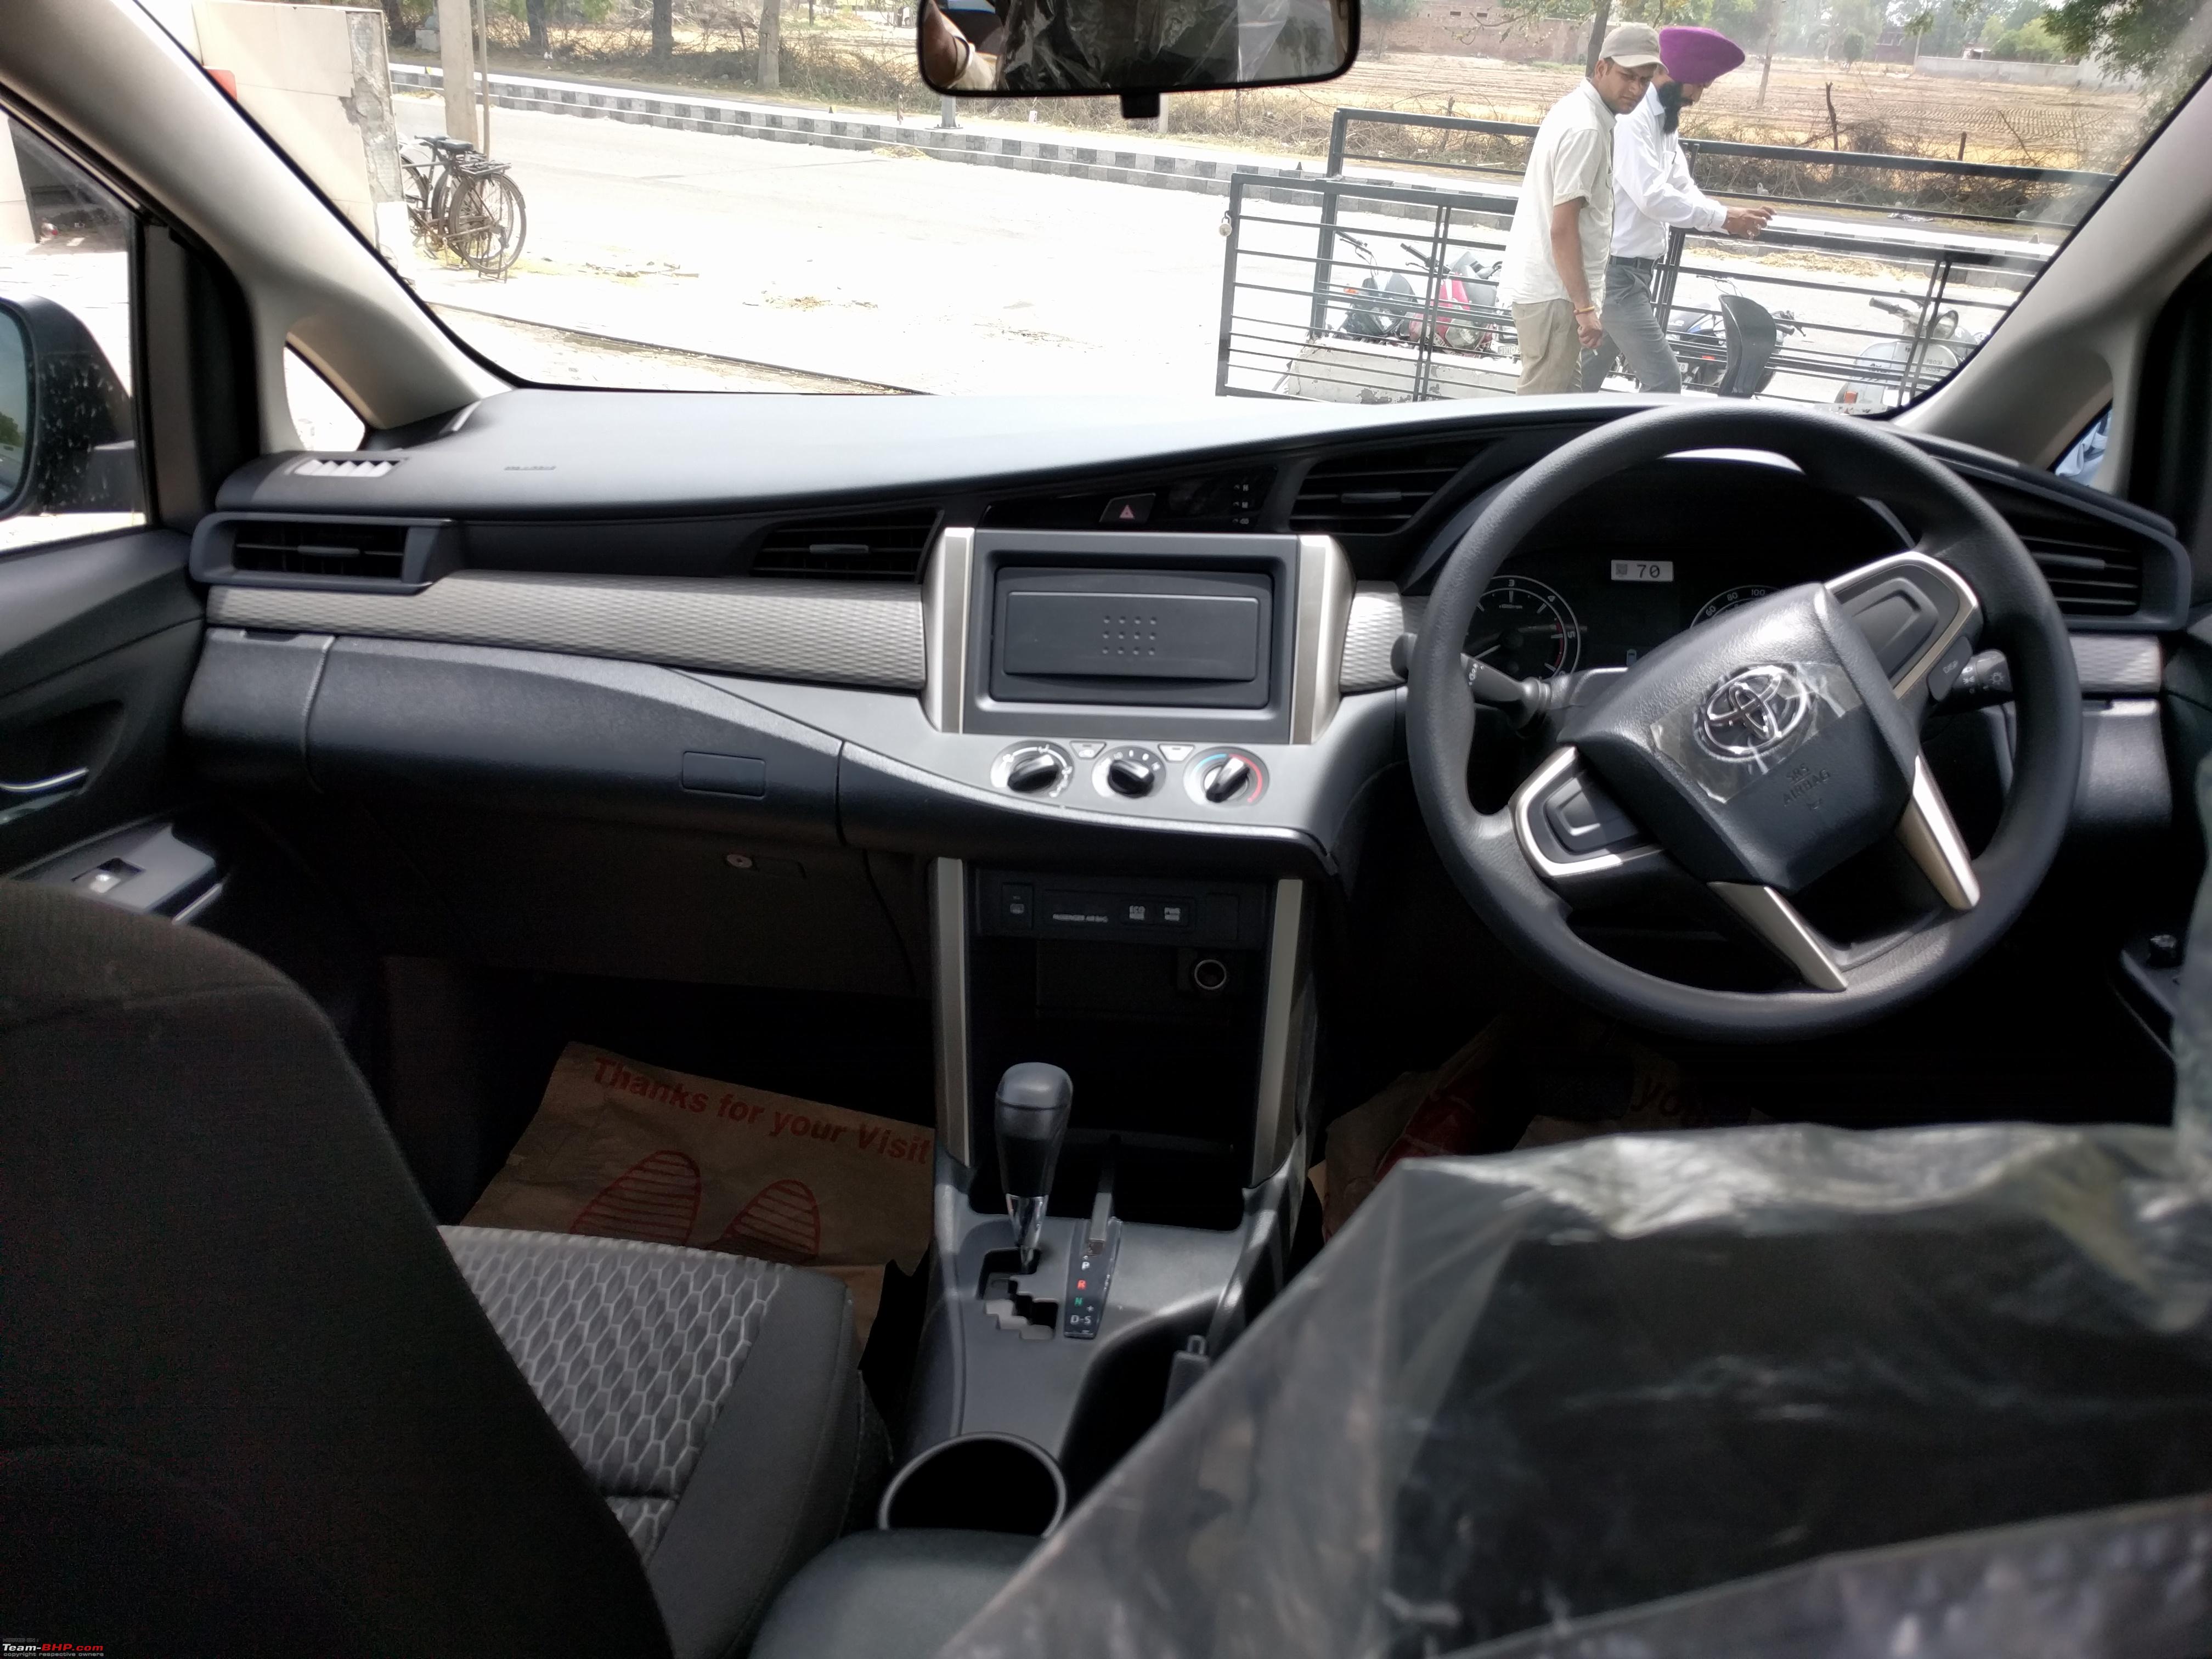 Automatic Toyota Innova Crysta Interior Allaboutwales